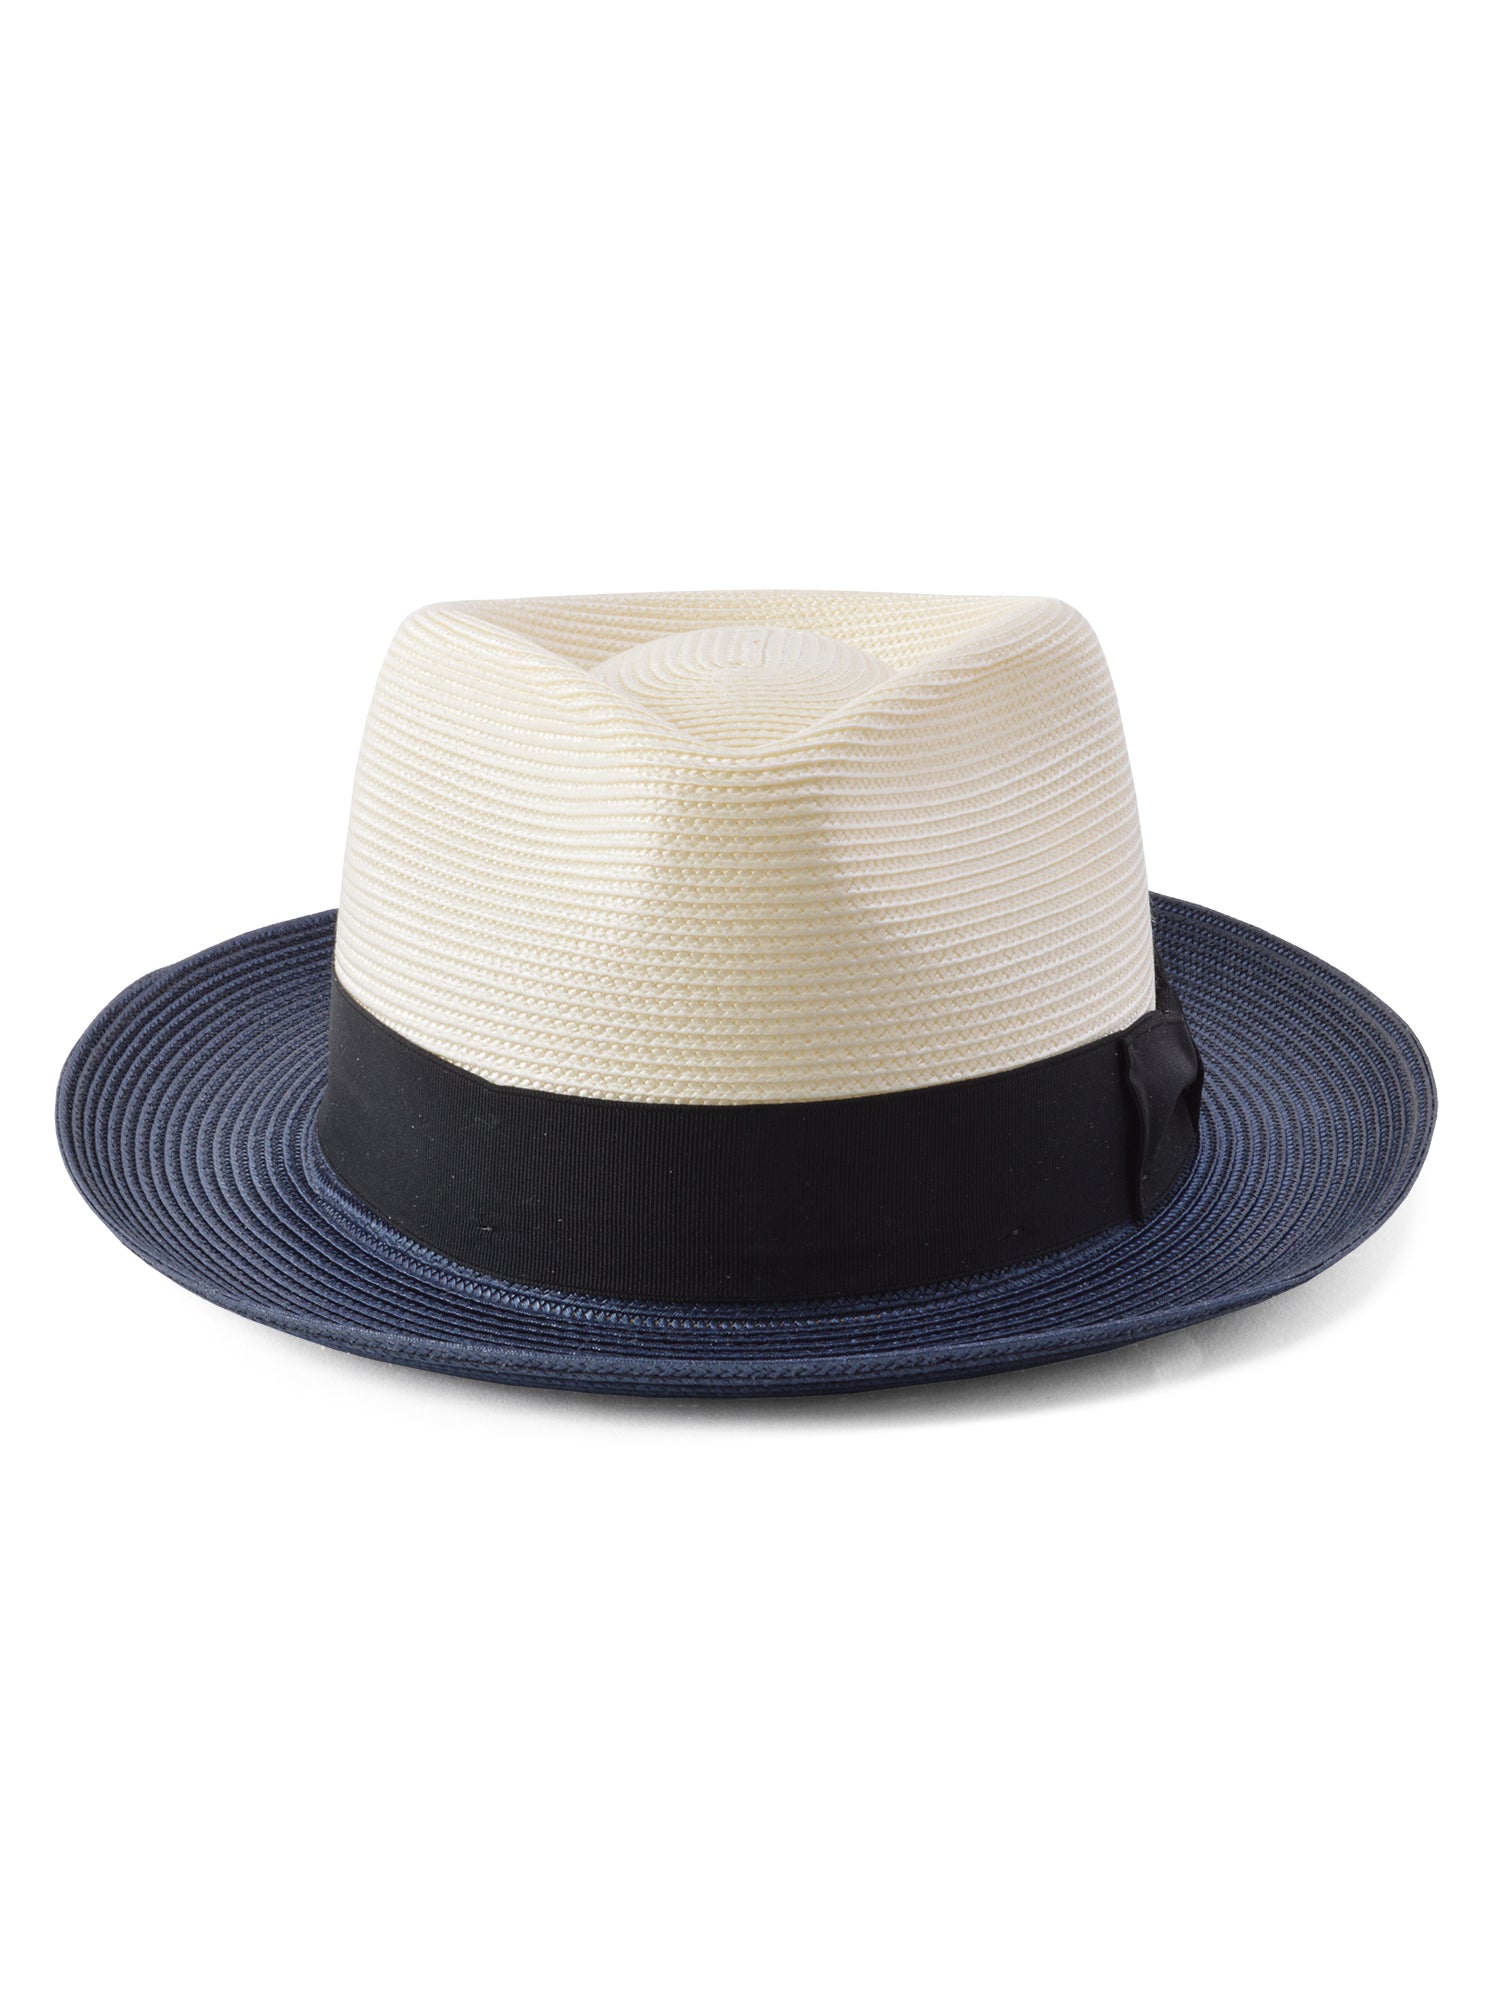 Stetson Dutoni Straw Hat in Ivory / Navy-3